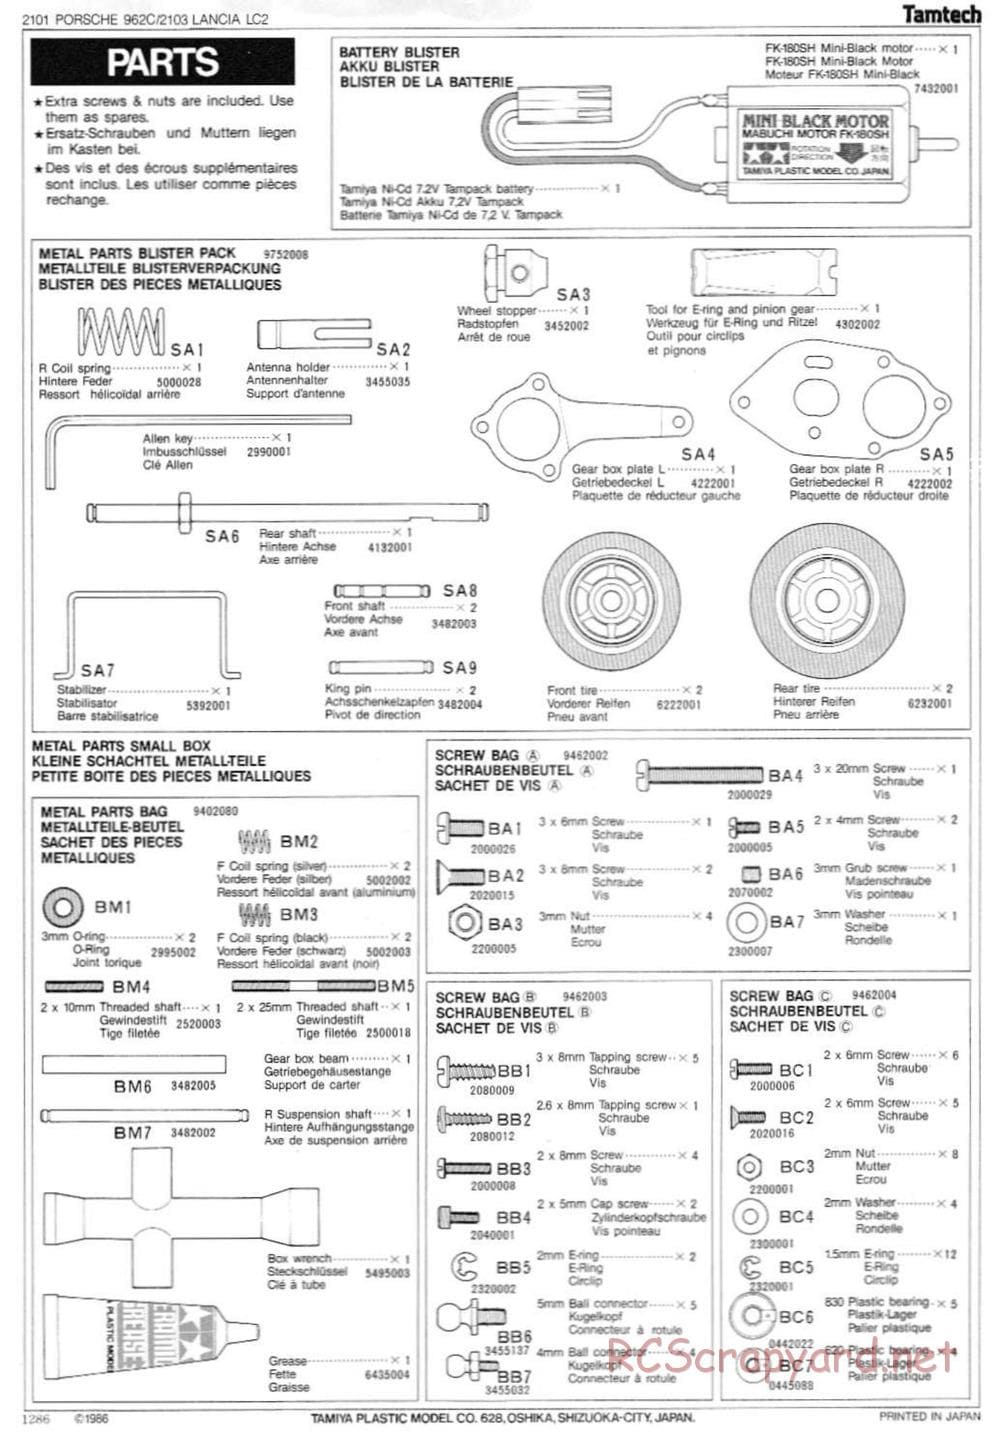 Tamiya - TamTech - On-Road Chassis - Manual - Page 15